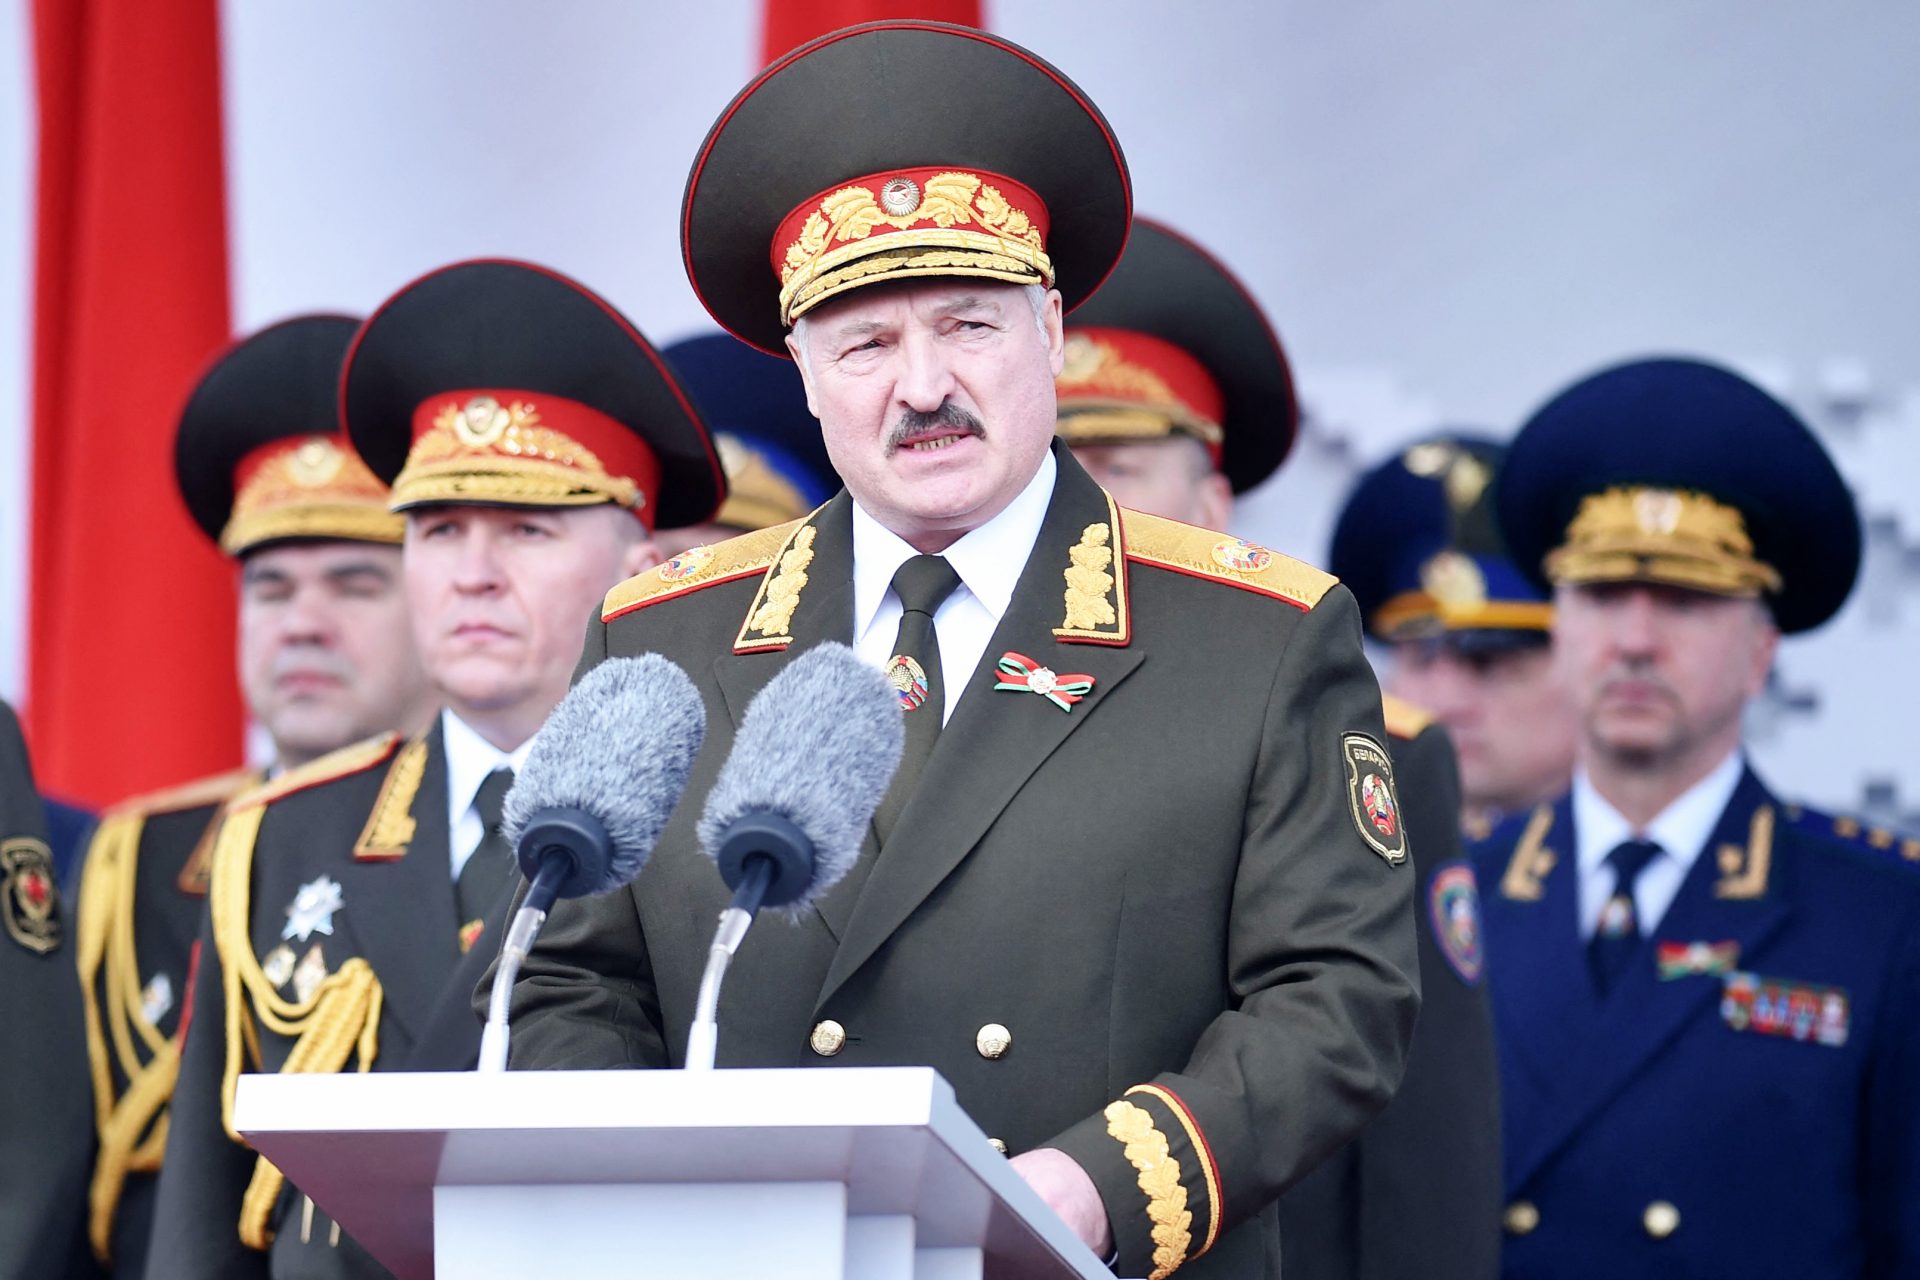 Destapan un ambicioso plan para derrocar a Lukashenko en Bielorrusia